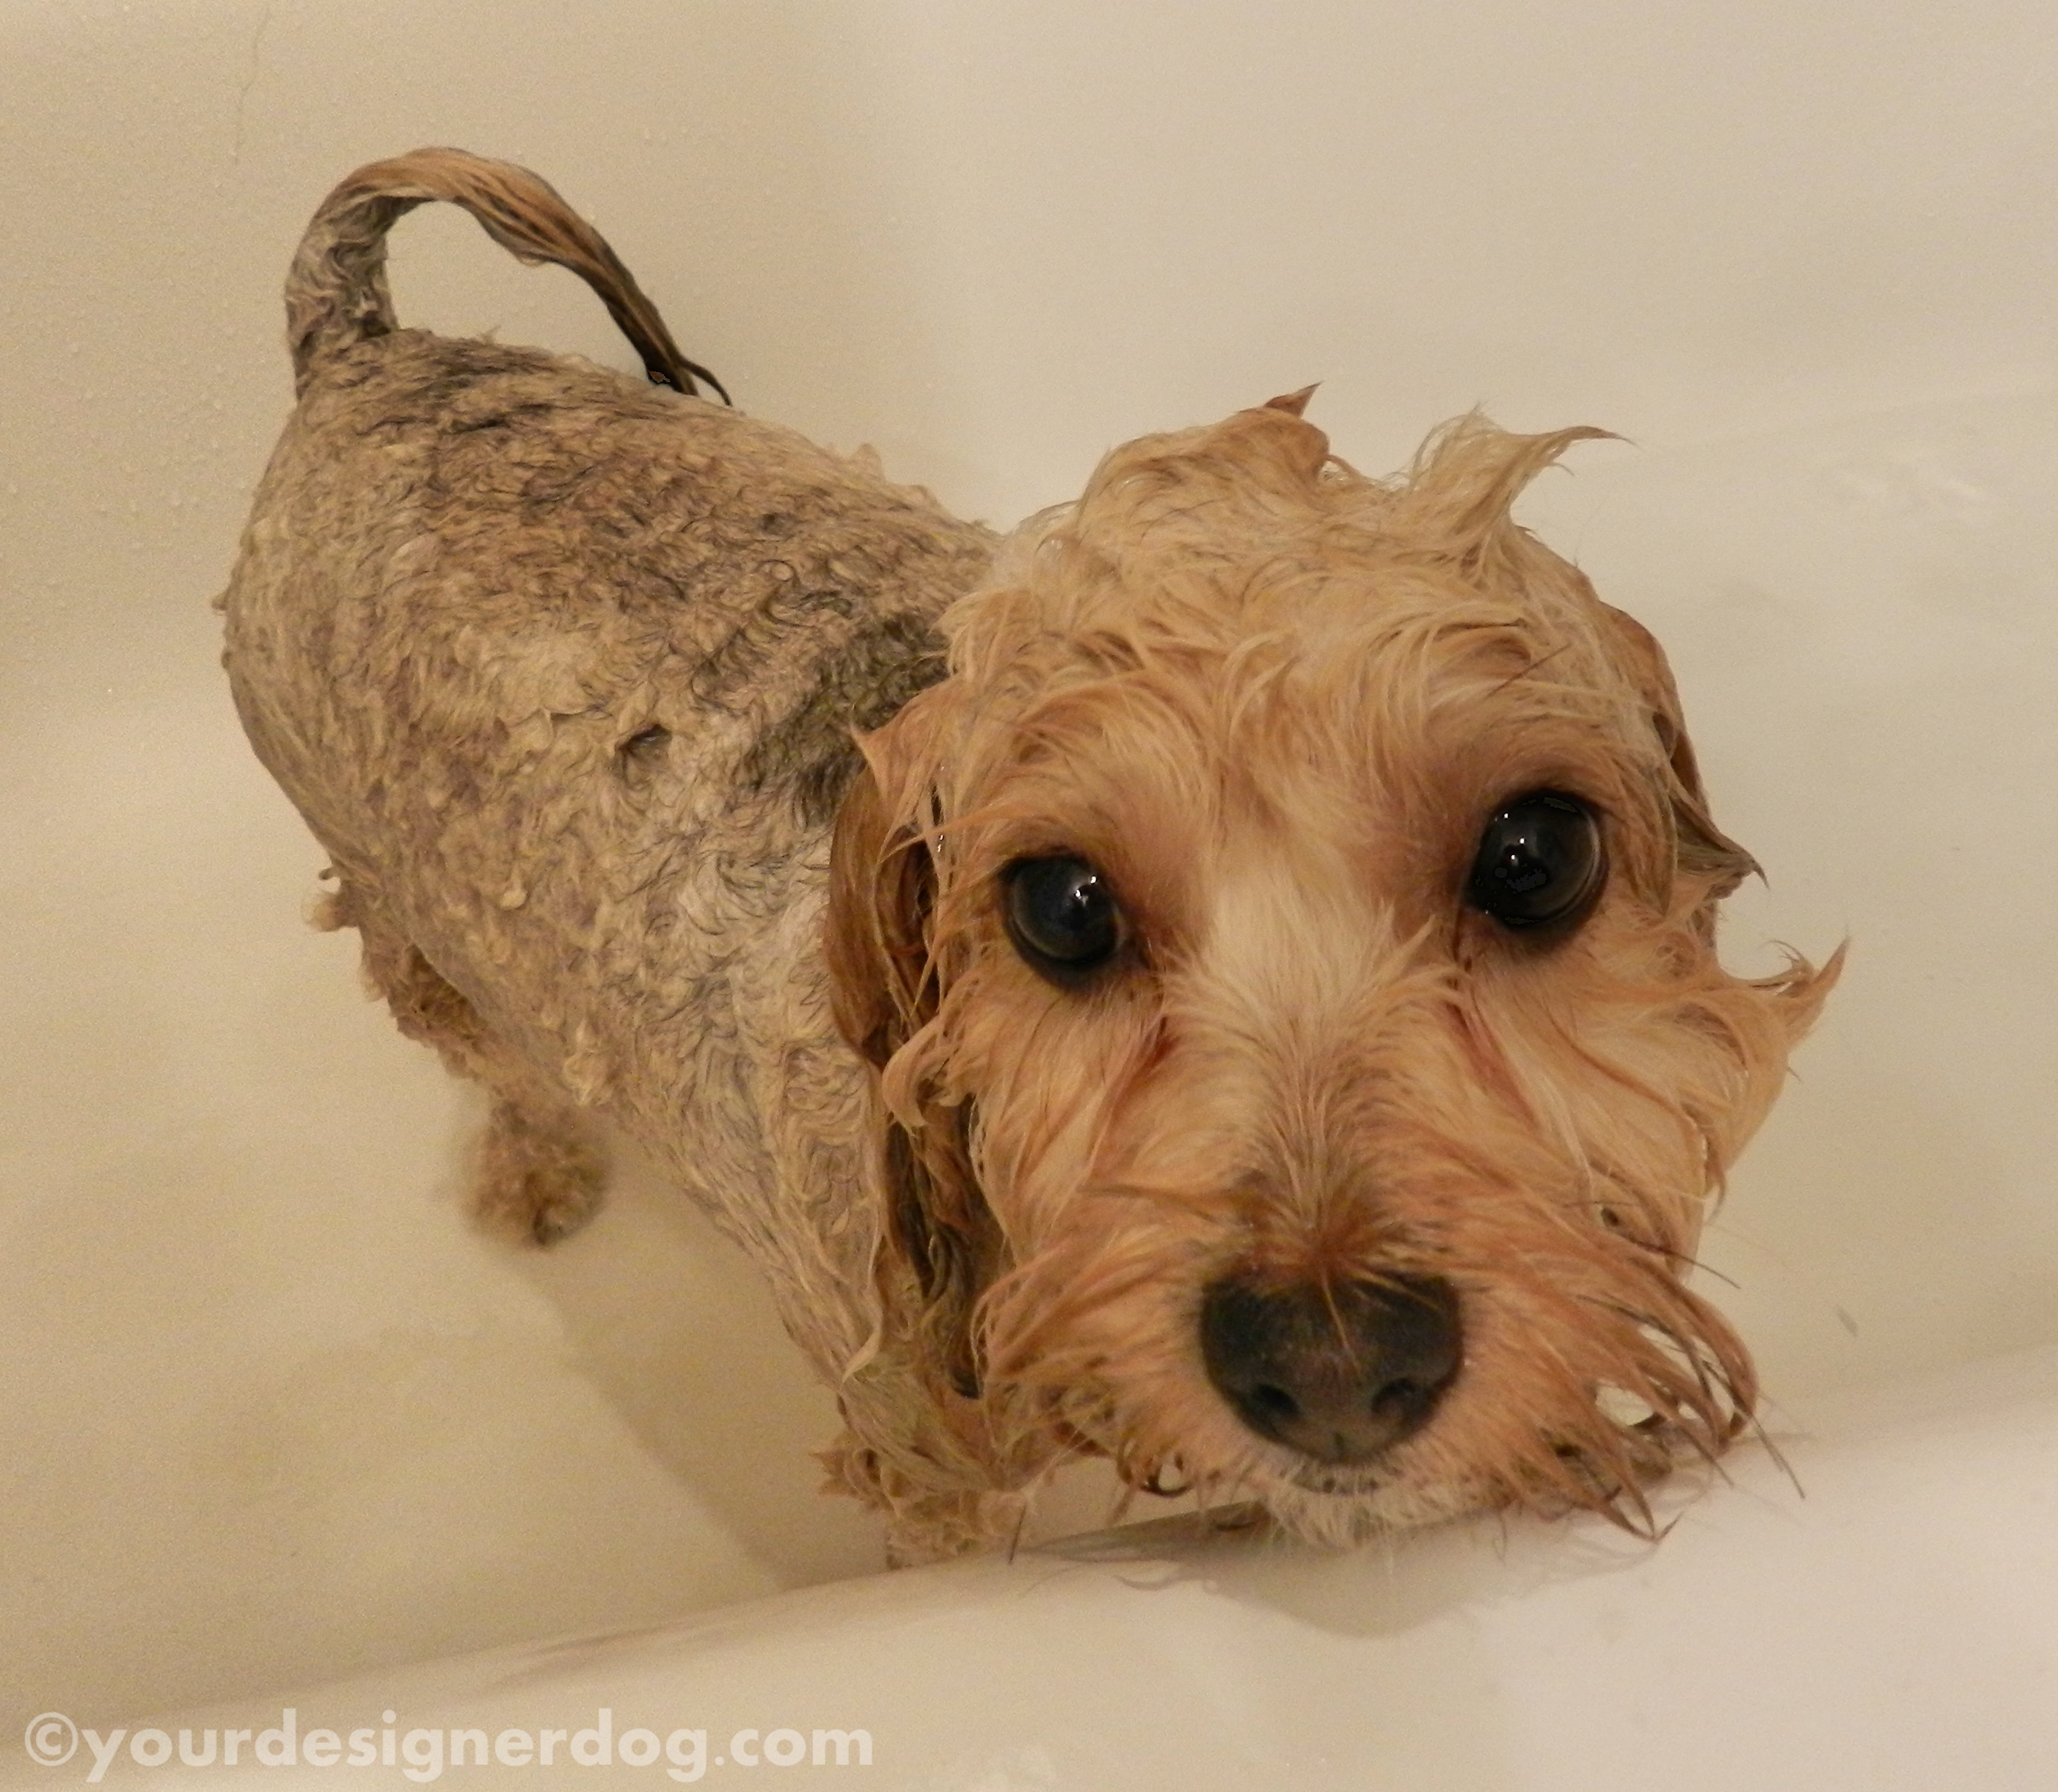 dogs, designer dogs, yorkipoo, yorkie poo, bath, shampoo, dog grooming